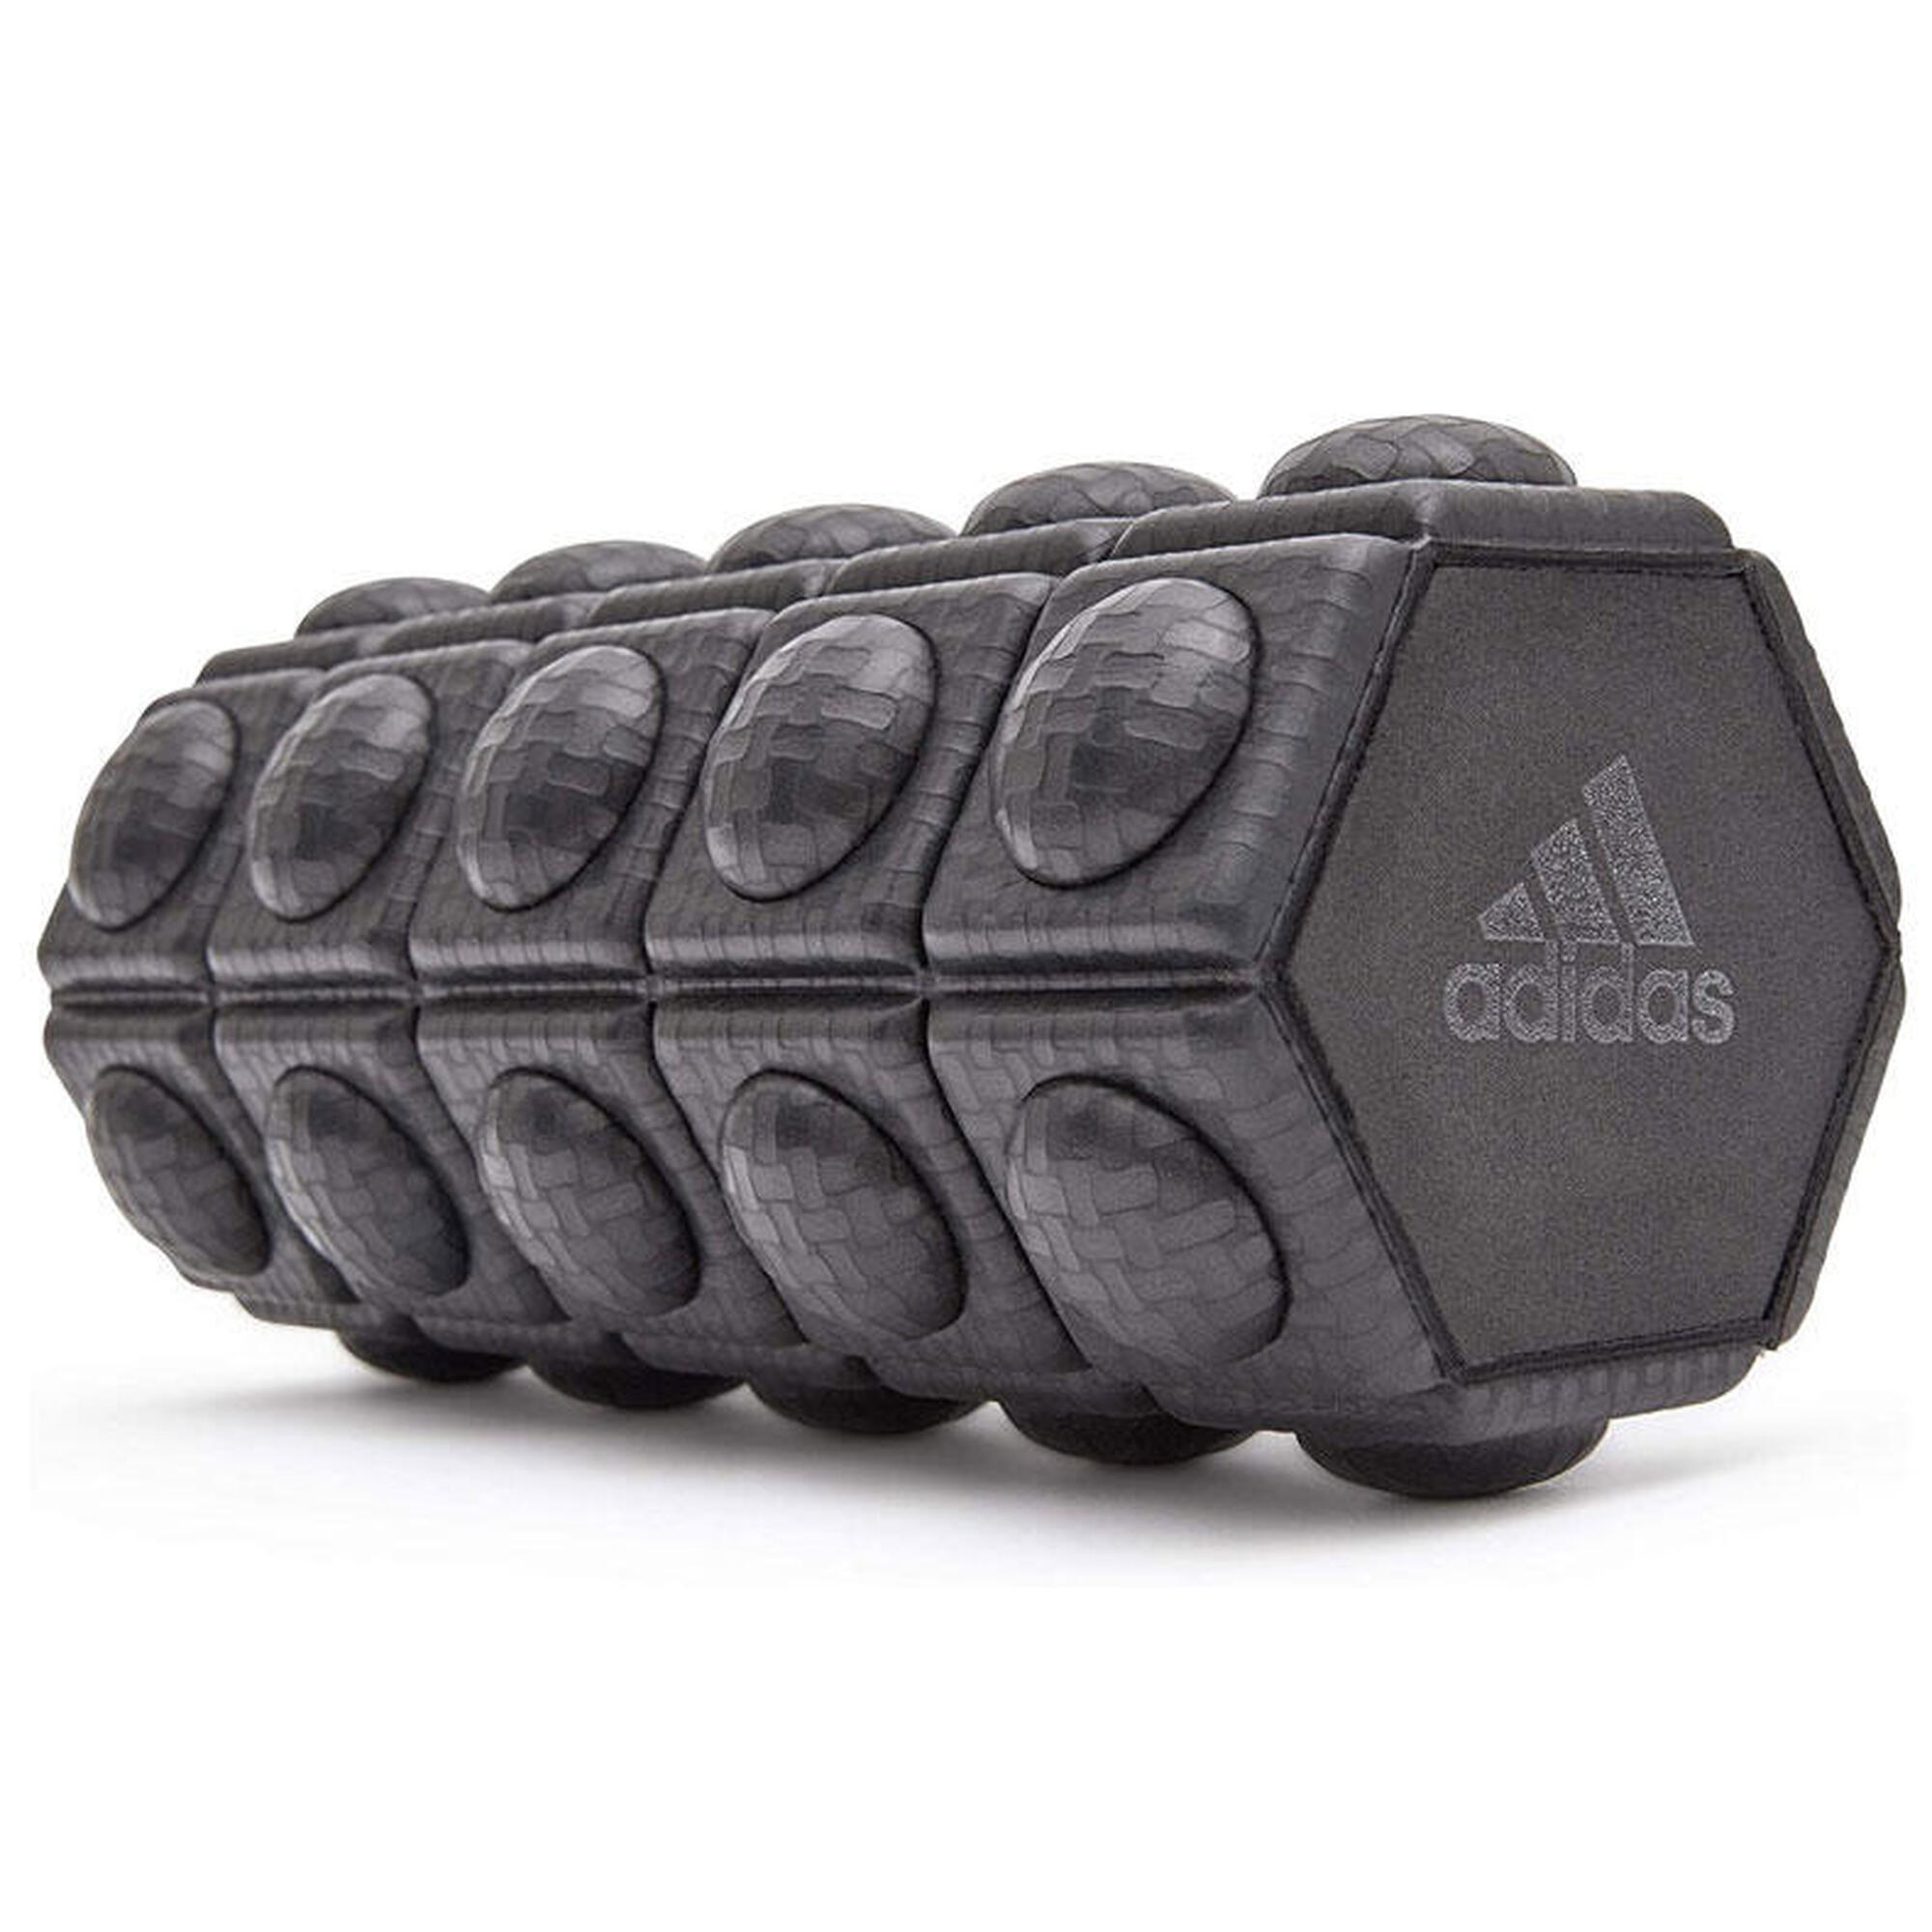 Adidas Roller Foam Mini - Schwarz